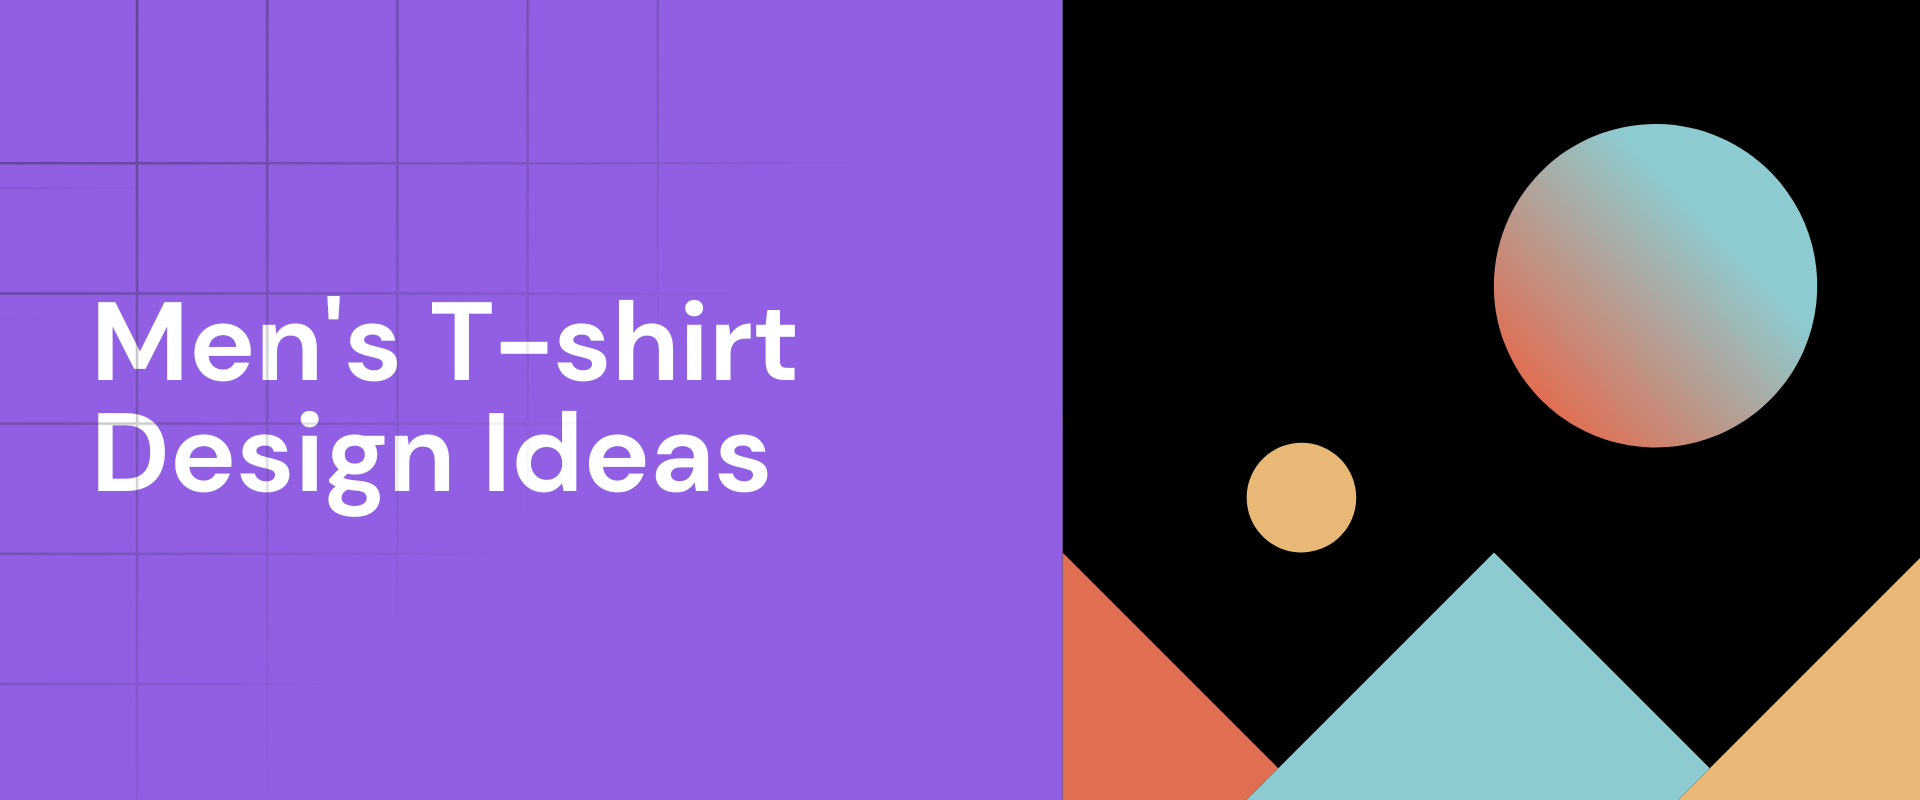 Men's T-shirt Design Ideas